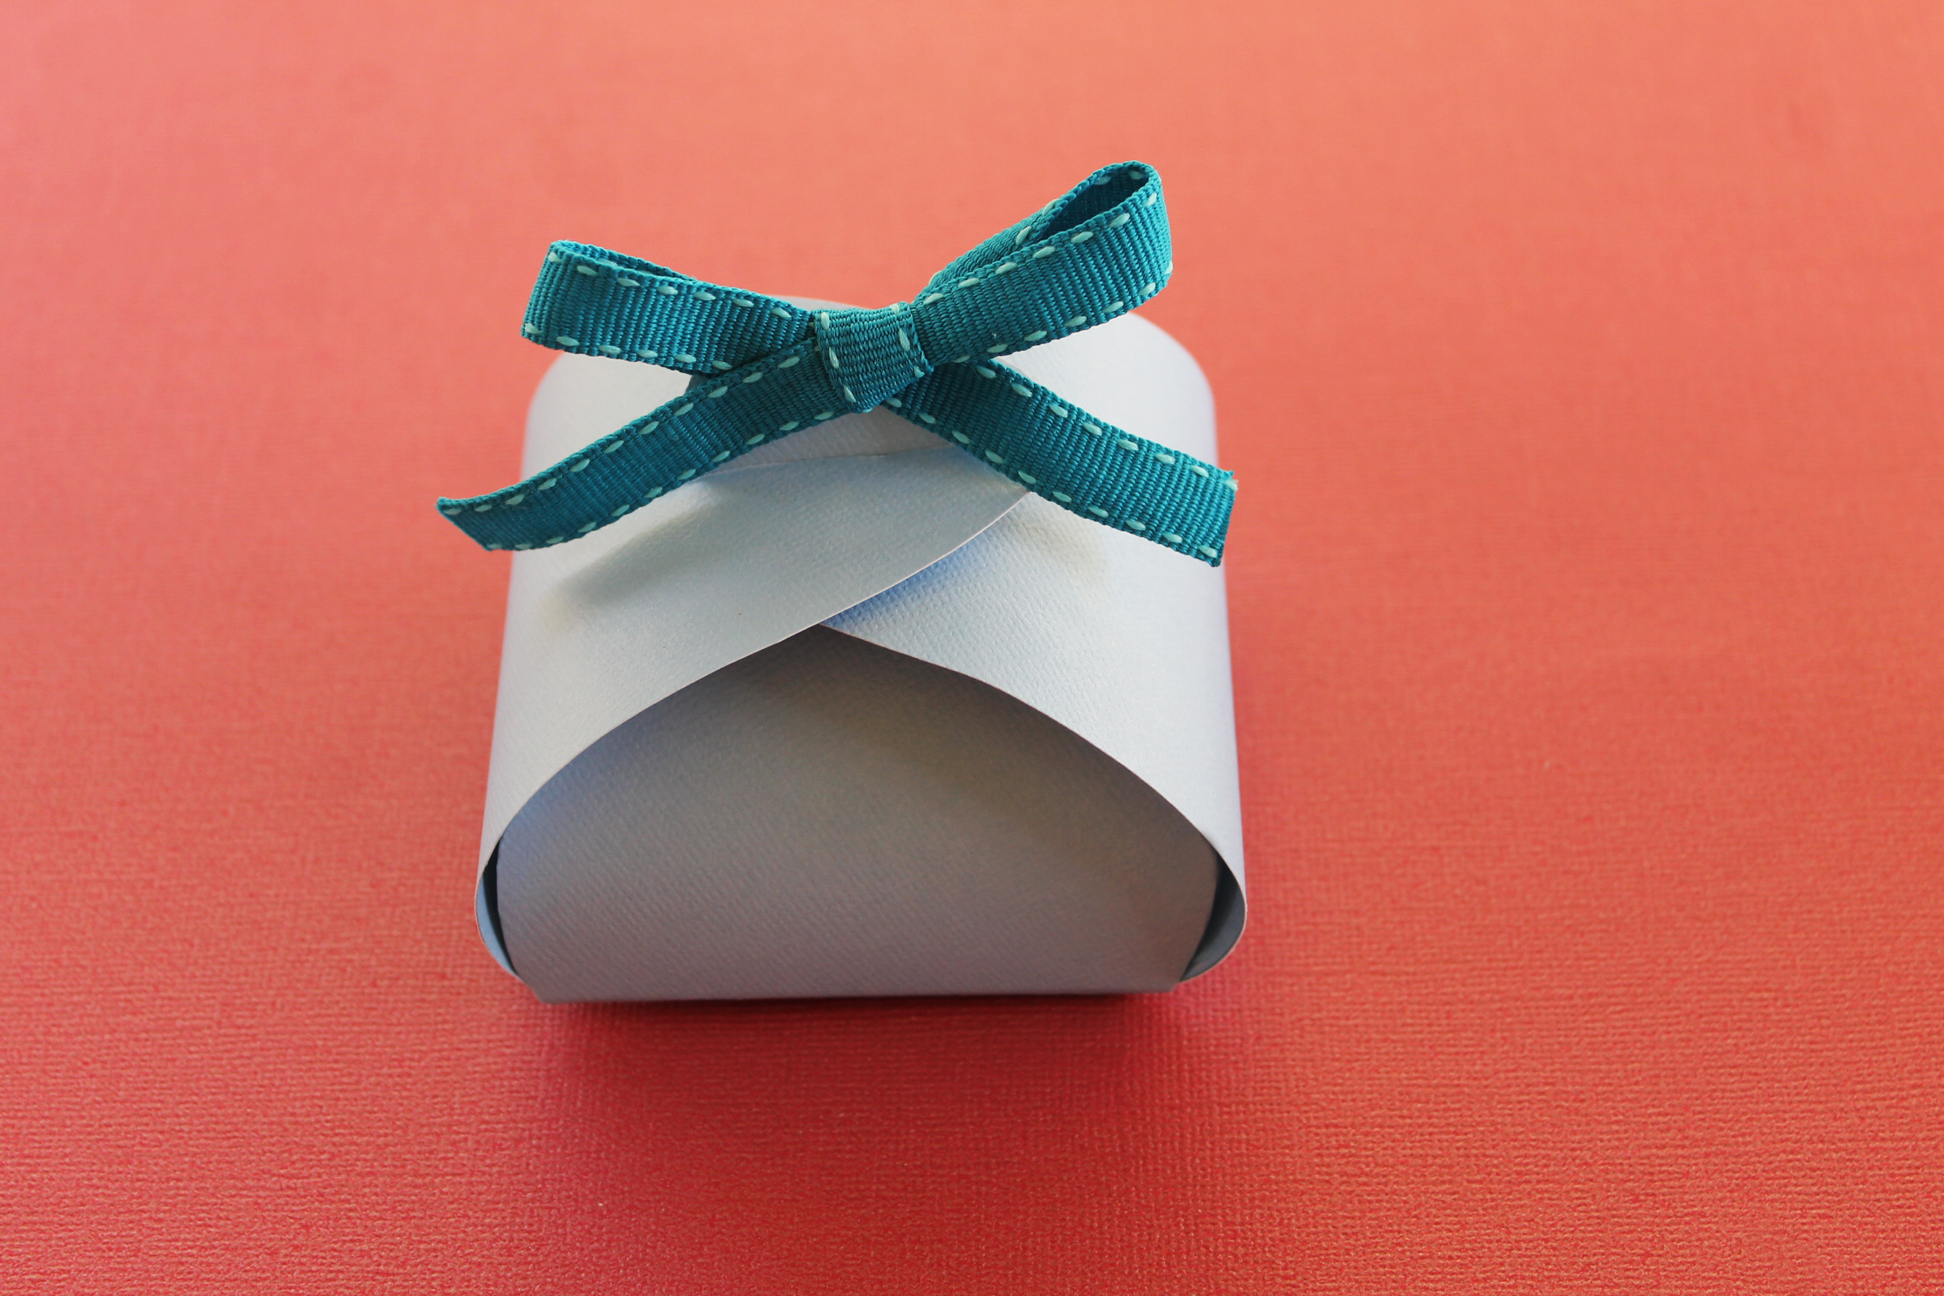 Origami Hexagonal Gift Box Tutorial - Paper Kawaii